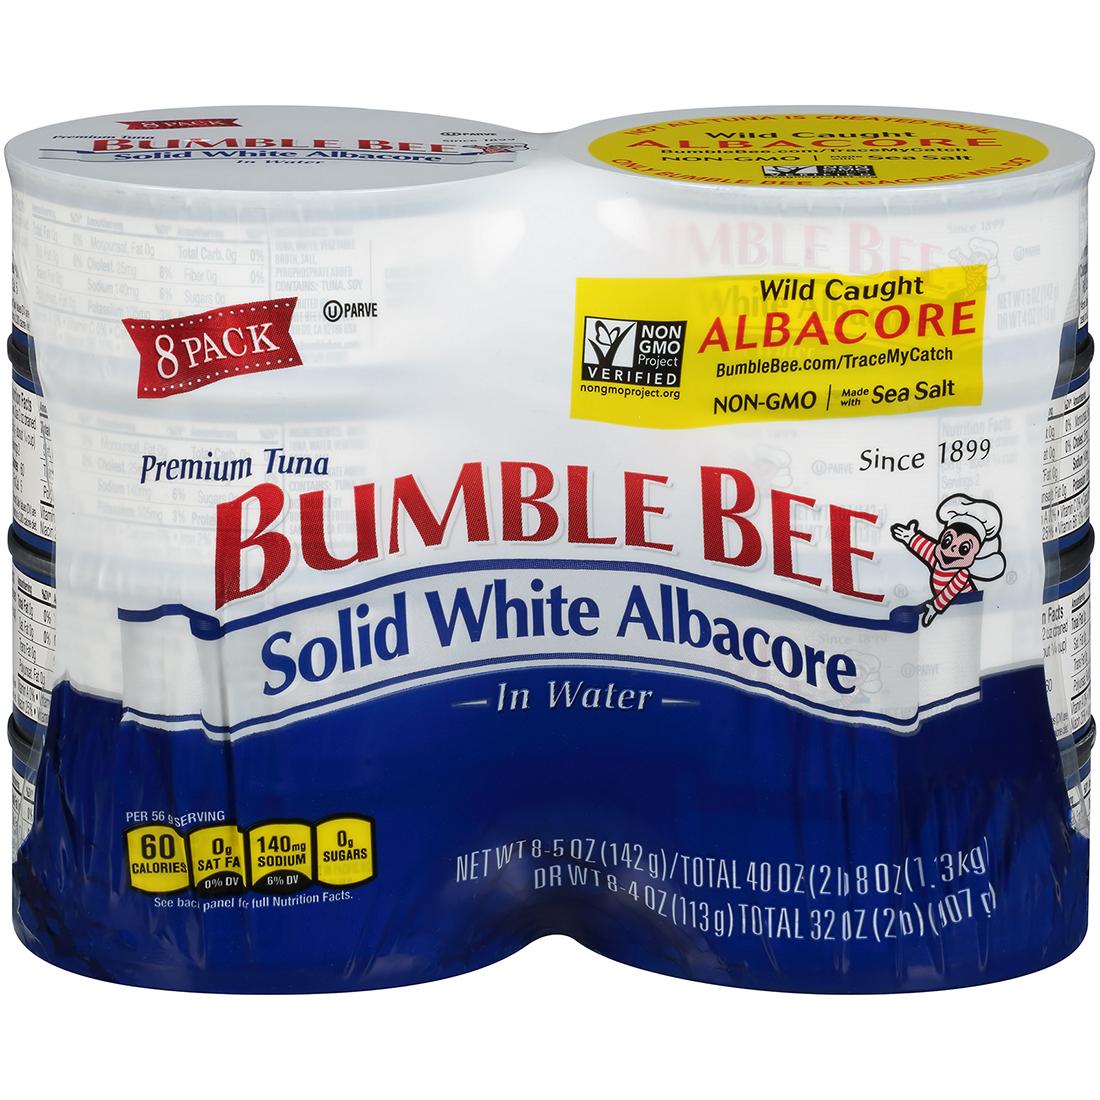 Bumble Bee Solid White Albacore Tuna in Water, 8 pk./5 oz.